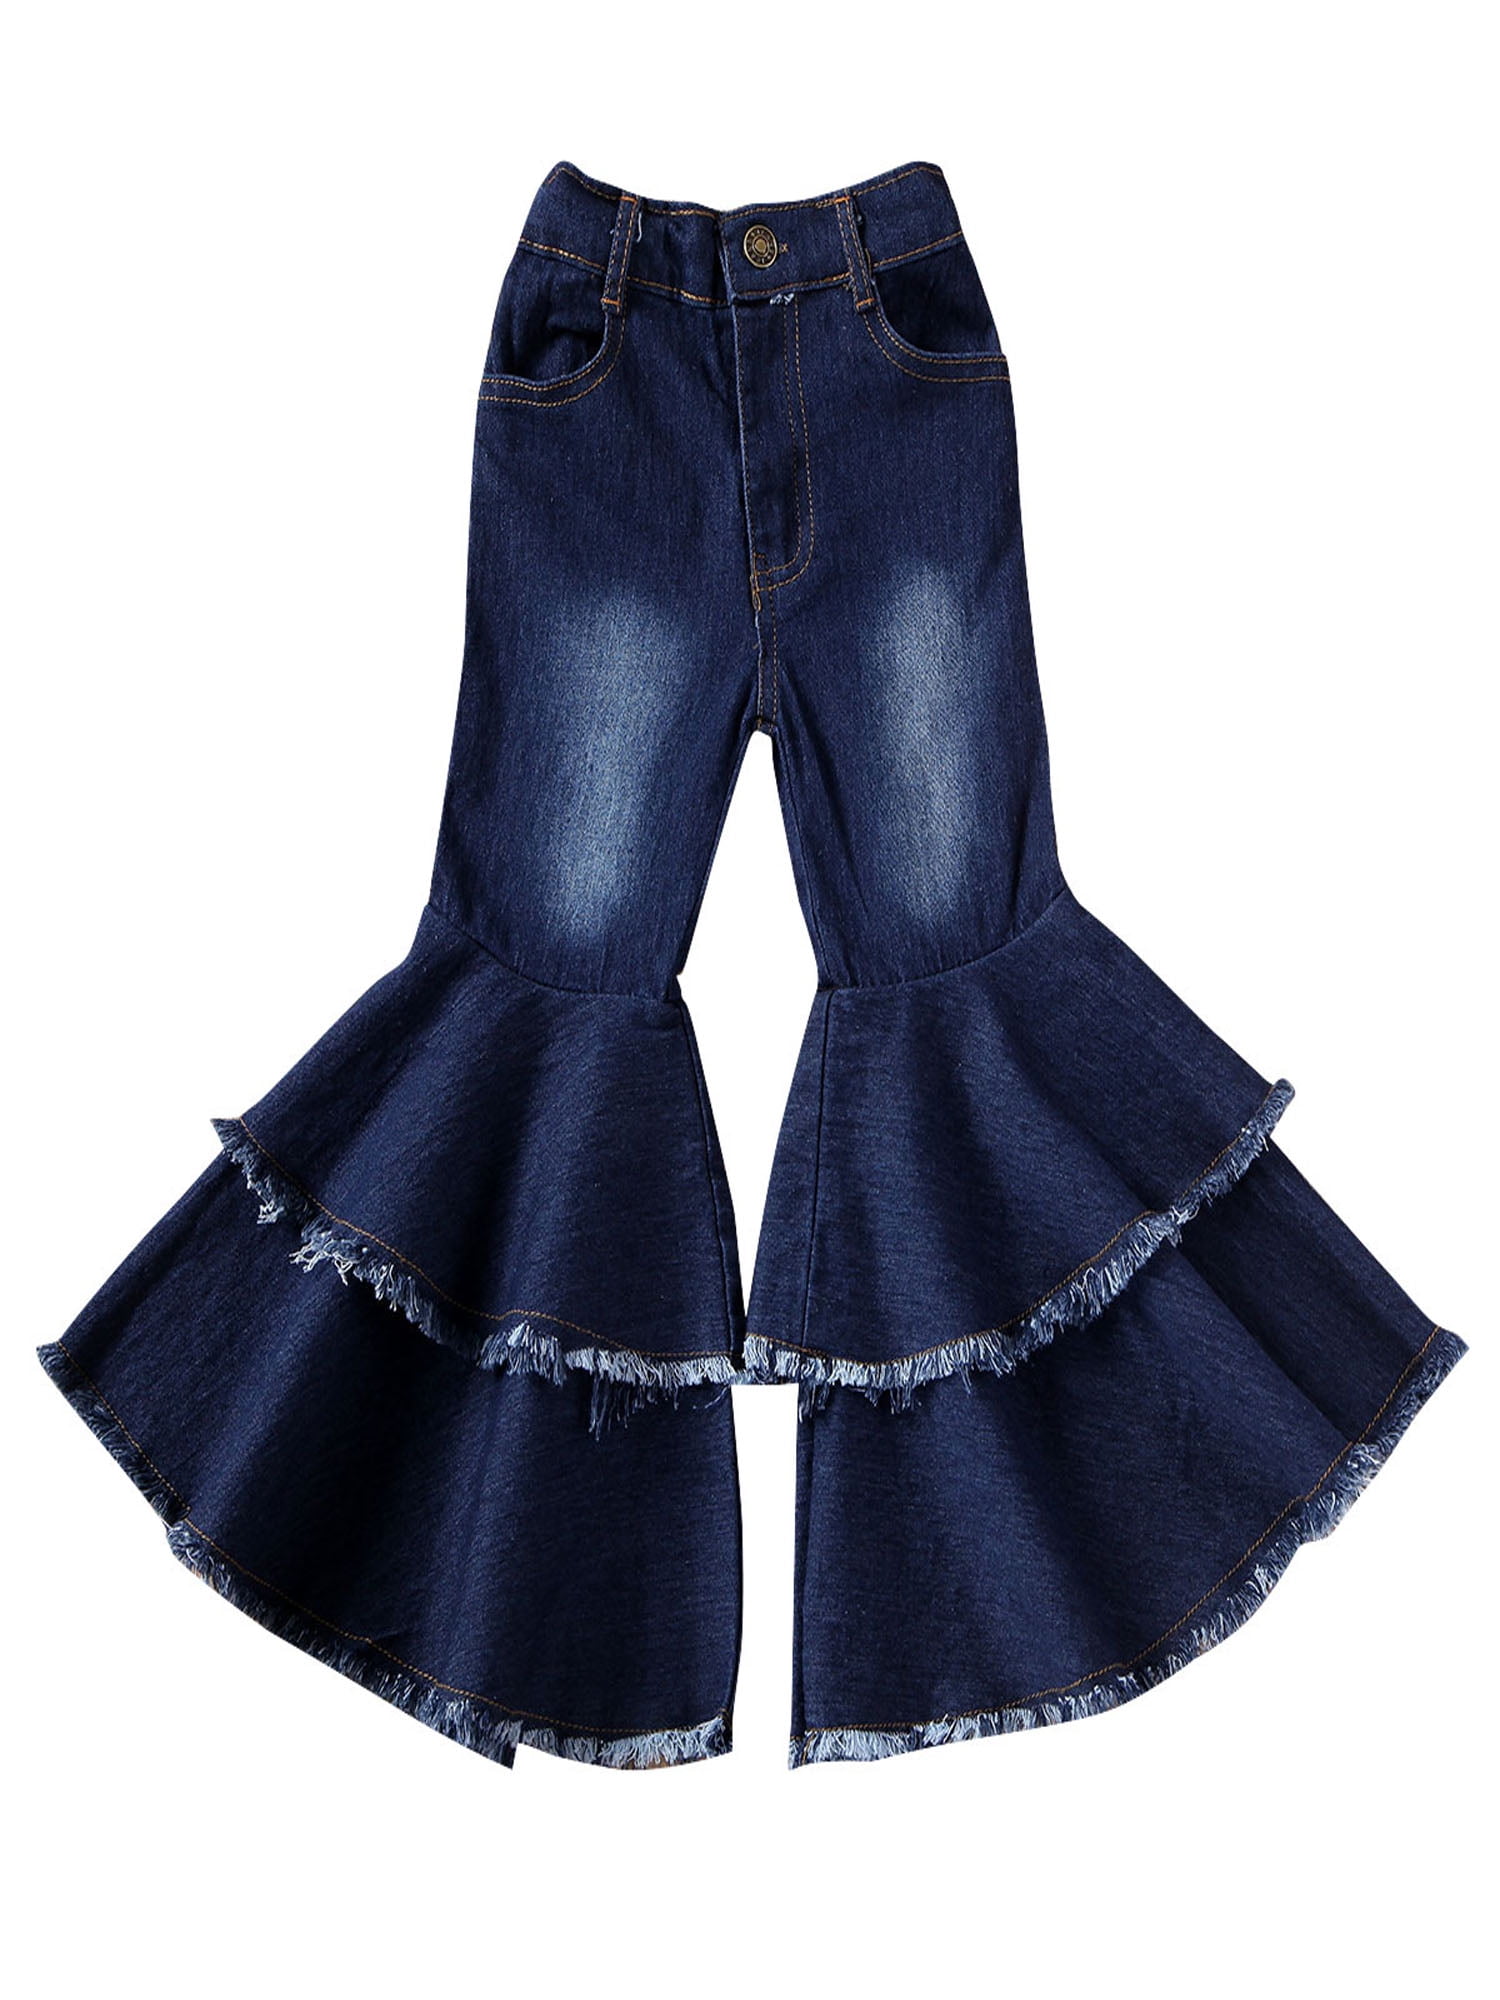 Zainafacai Kid Baby Girl Flower Embroidered Bell Bottom Jeans Elastic Waist Tassel Flare Denim Pants